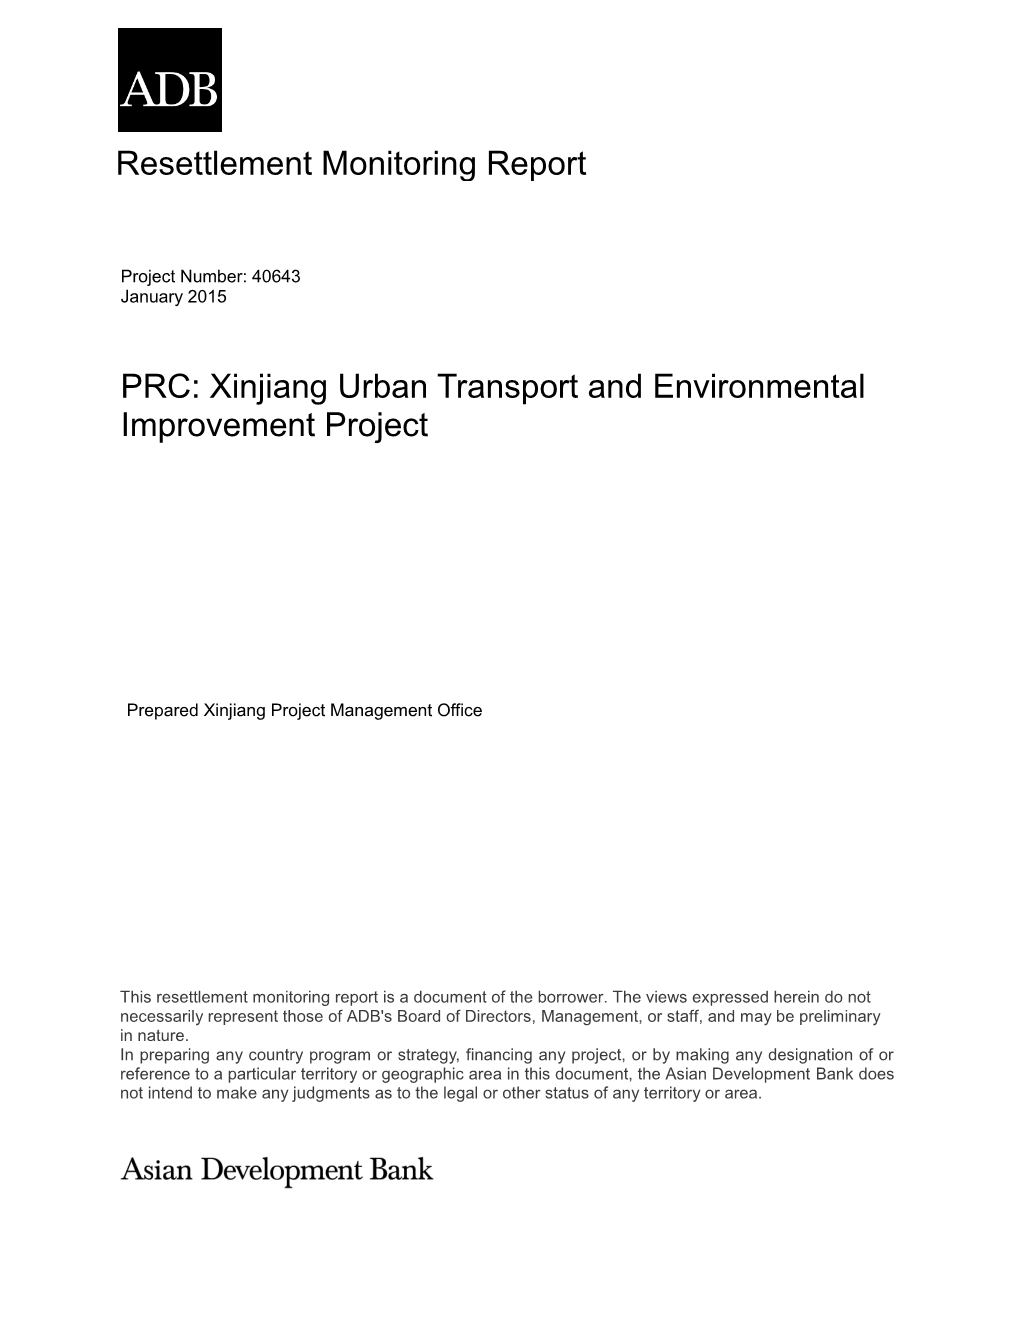 40643-013: Resettlement Monitoring Report